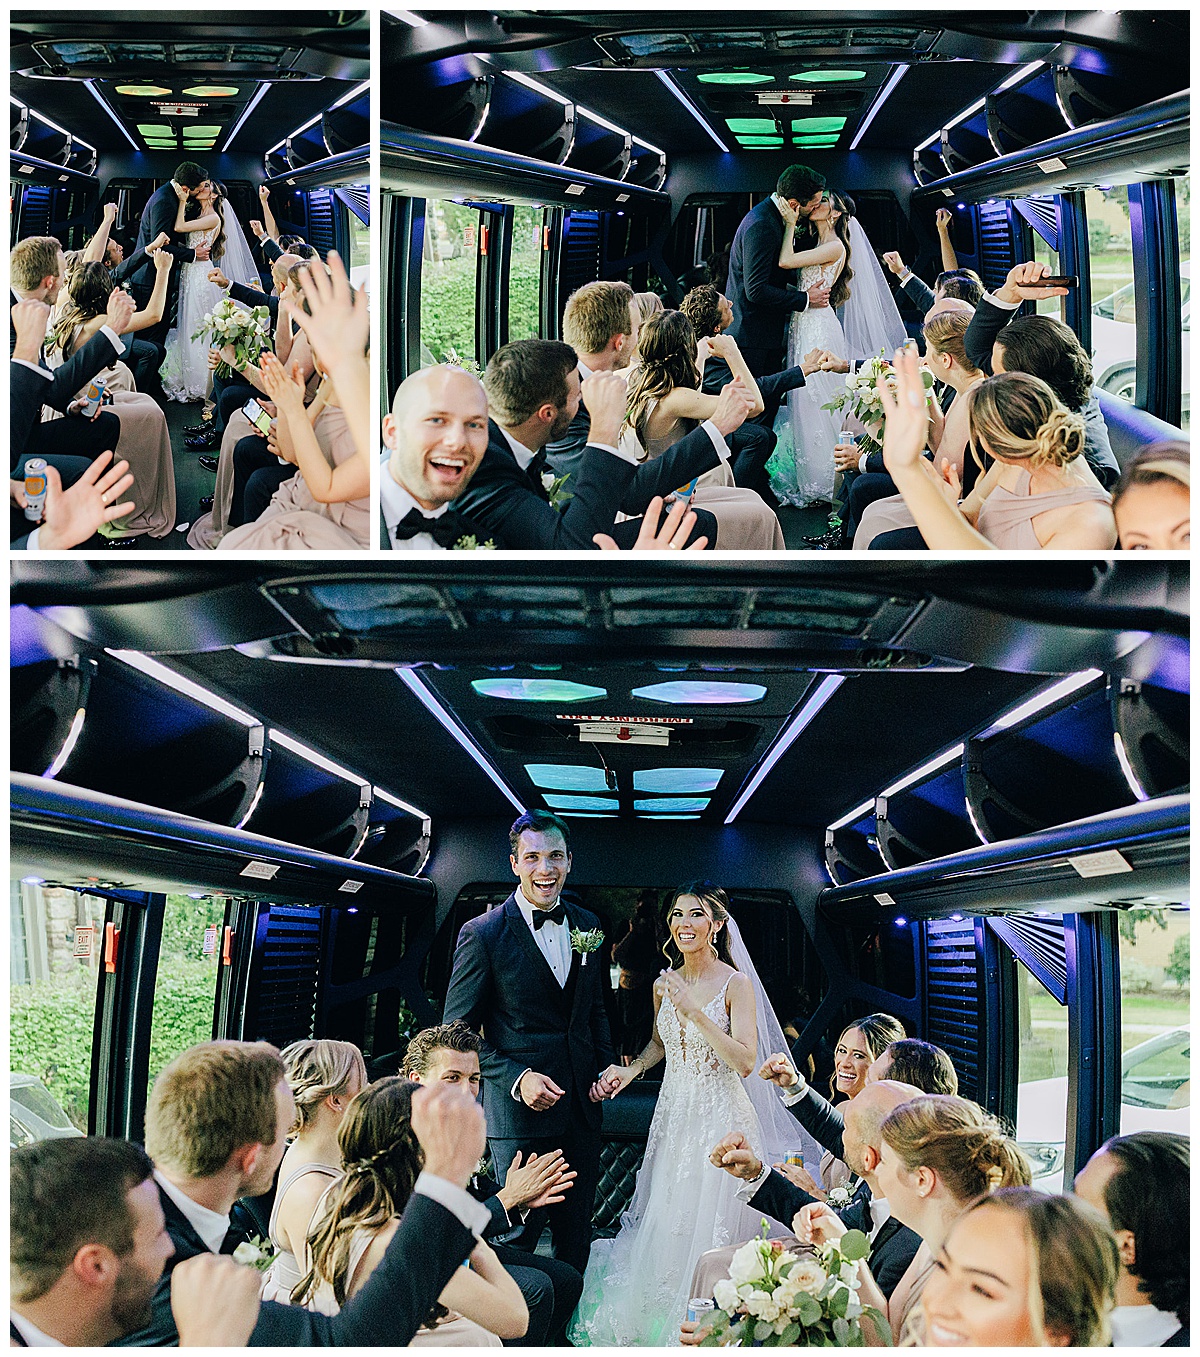 Couple has fun in limo for Charming Michigan Wedding